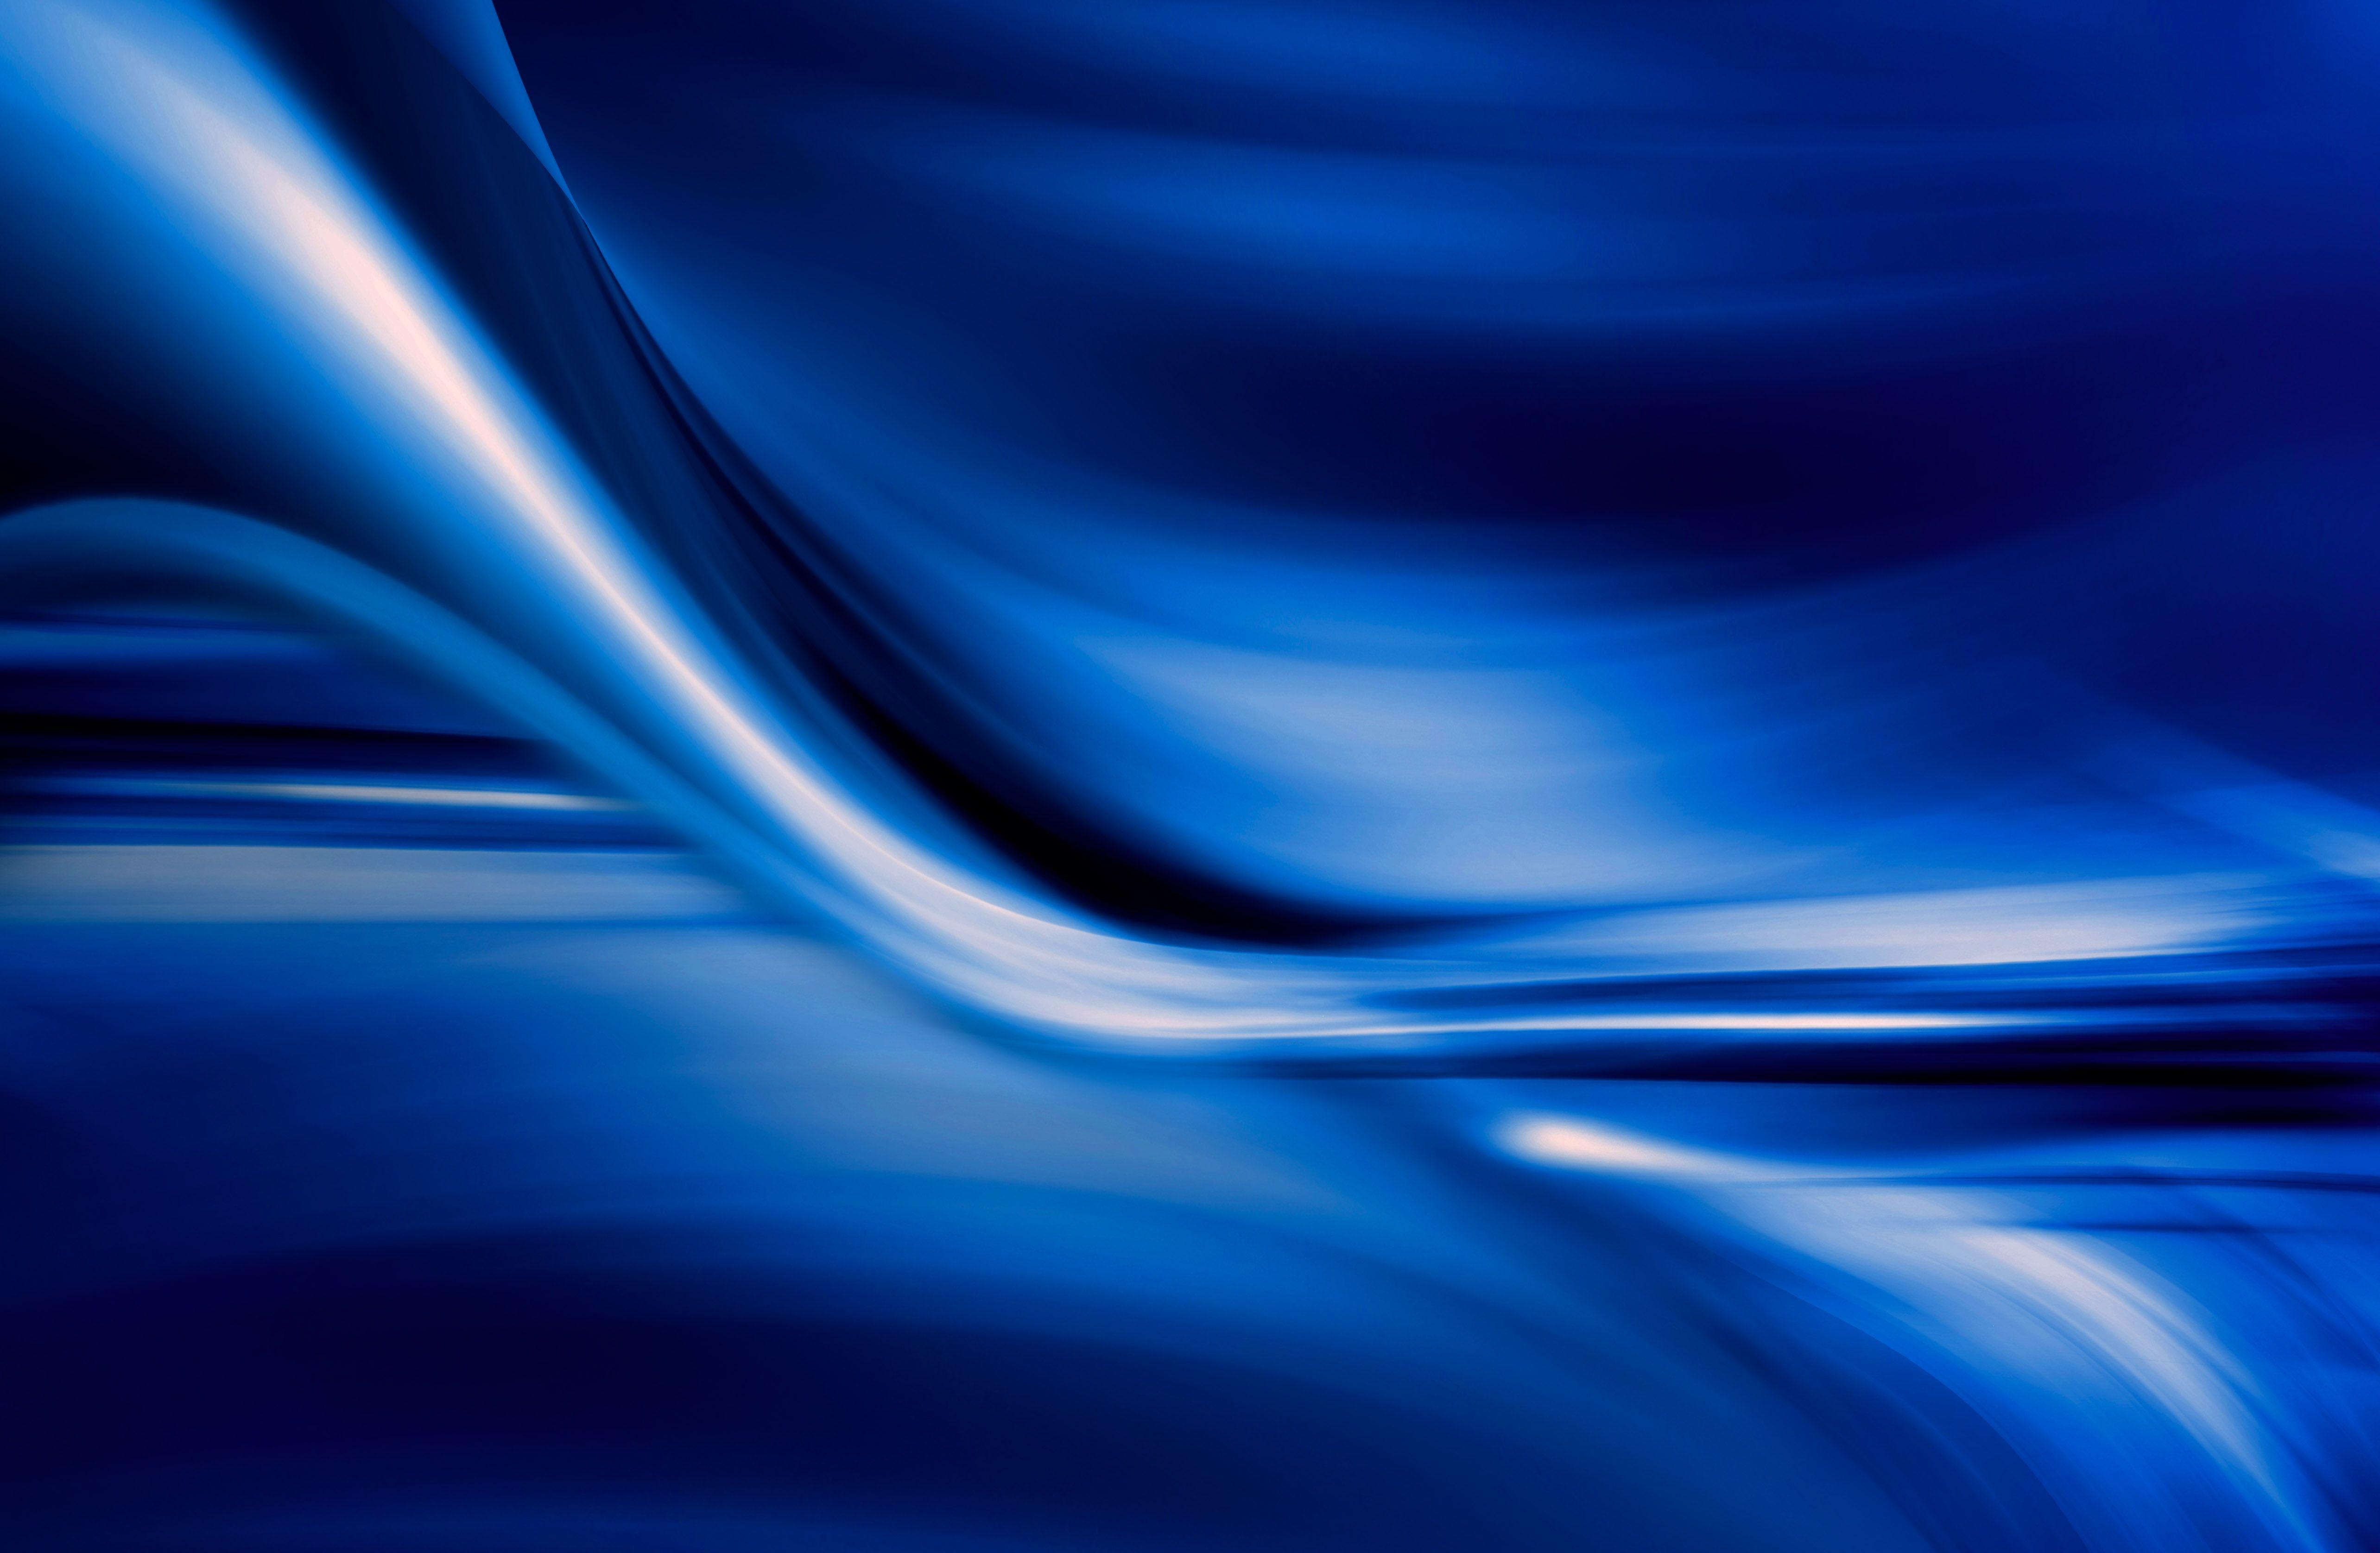 Royal Blue Abstract Wallpapers - Top Free Royal Blue Abstract ...